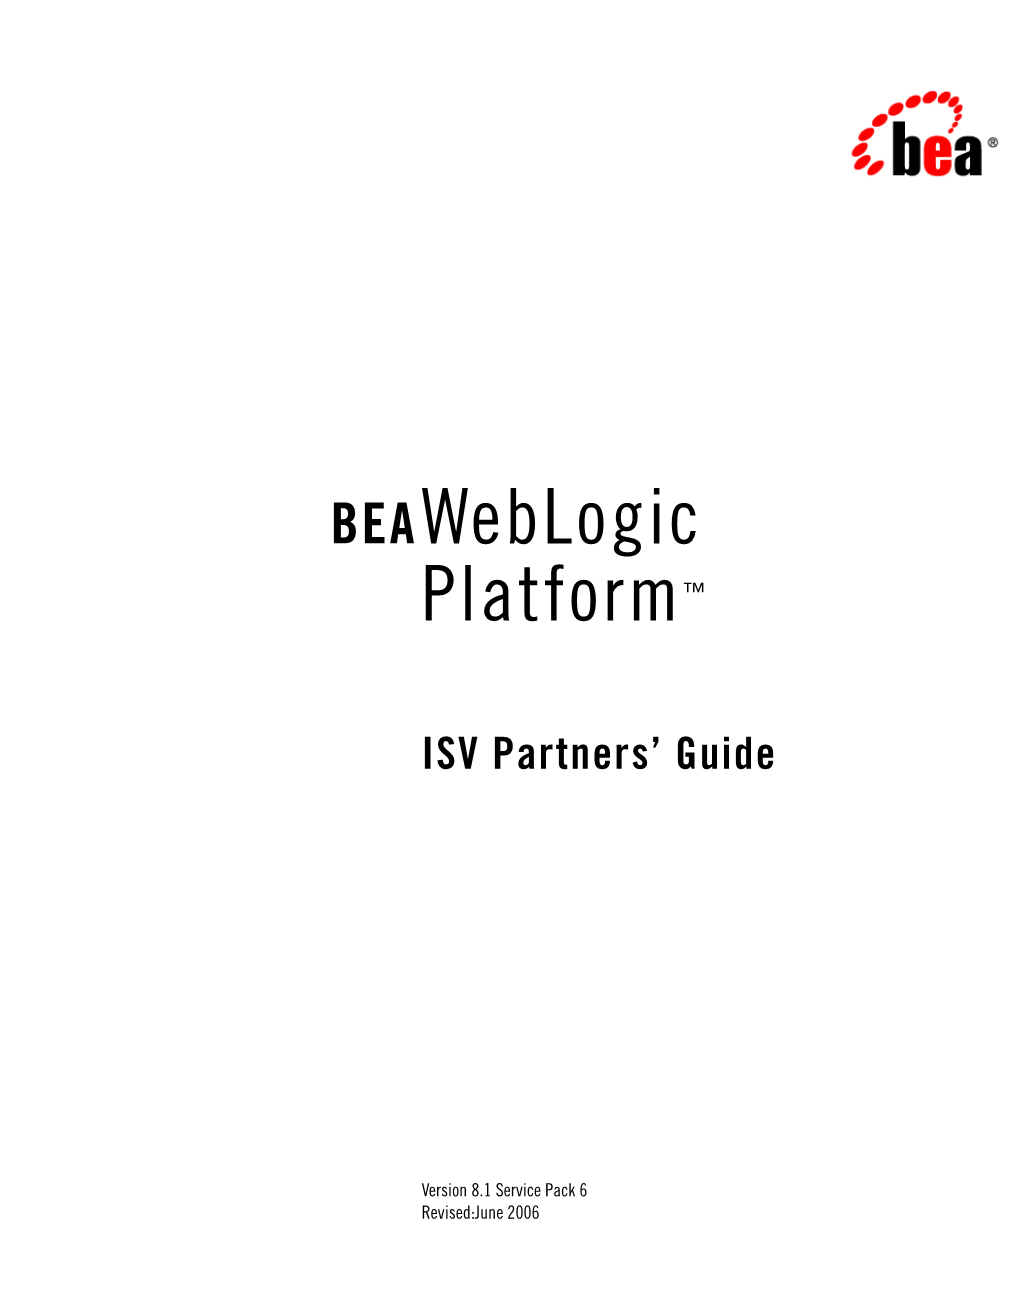 Beaweblogic Platform™